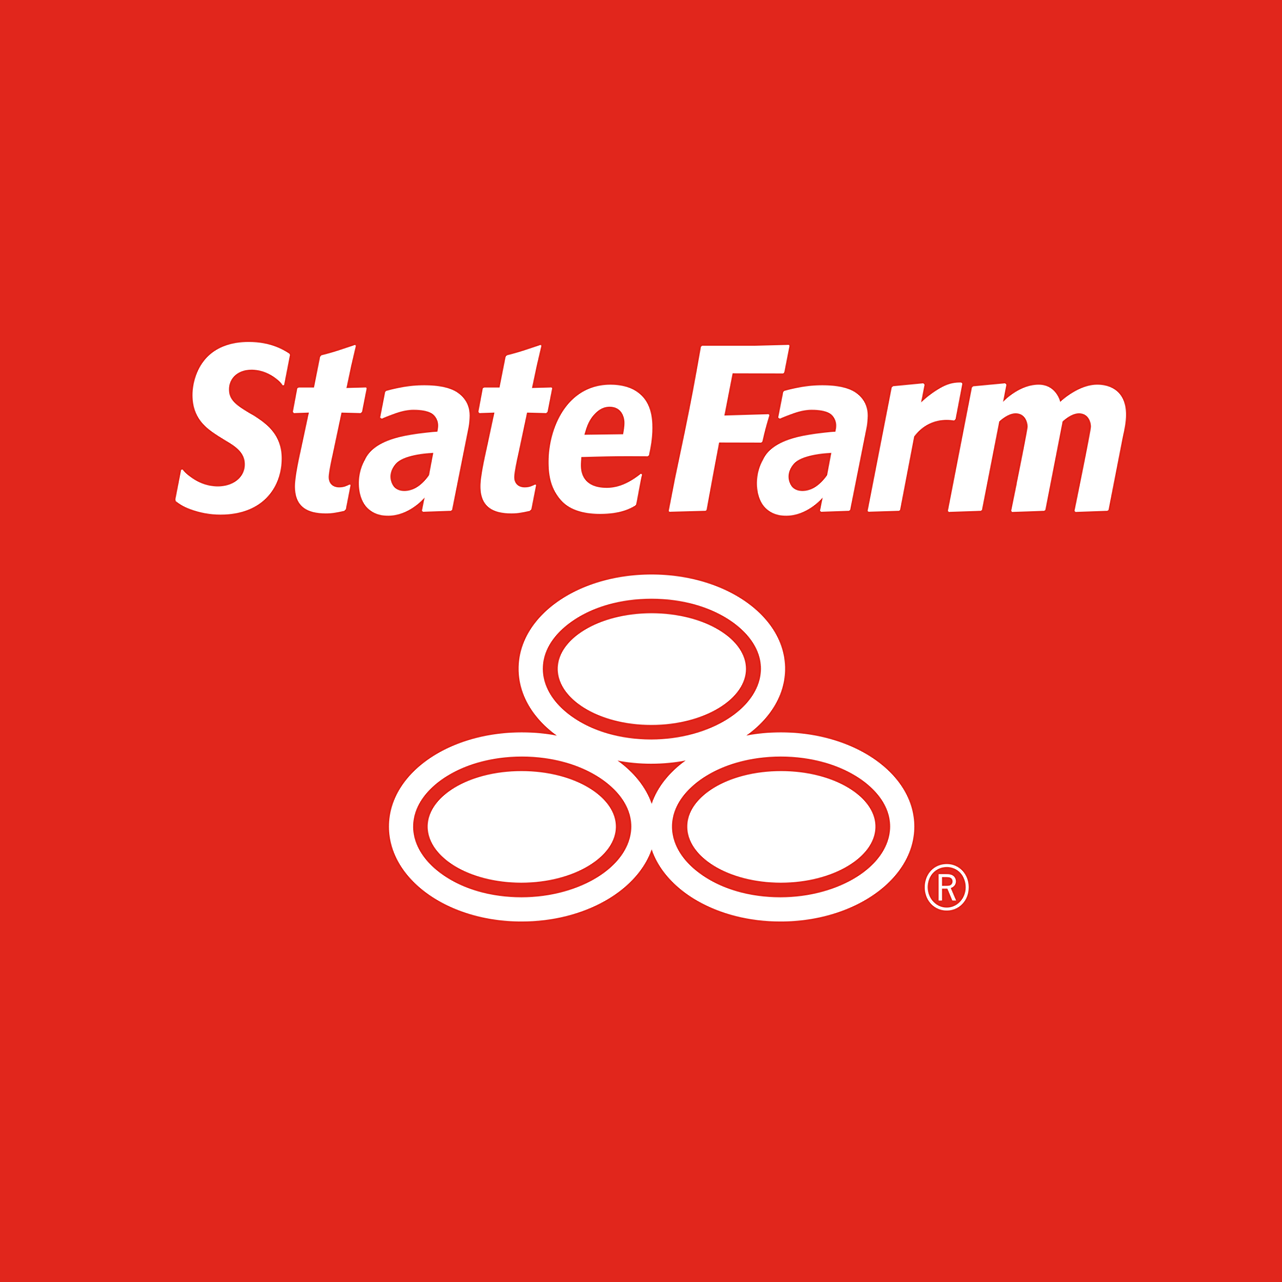 State Farm Car Insurance Review - Cnet